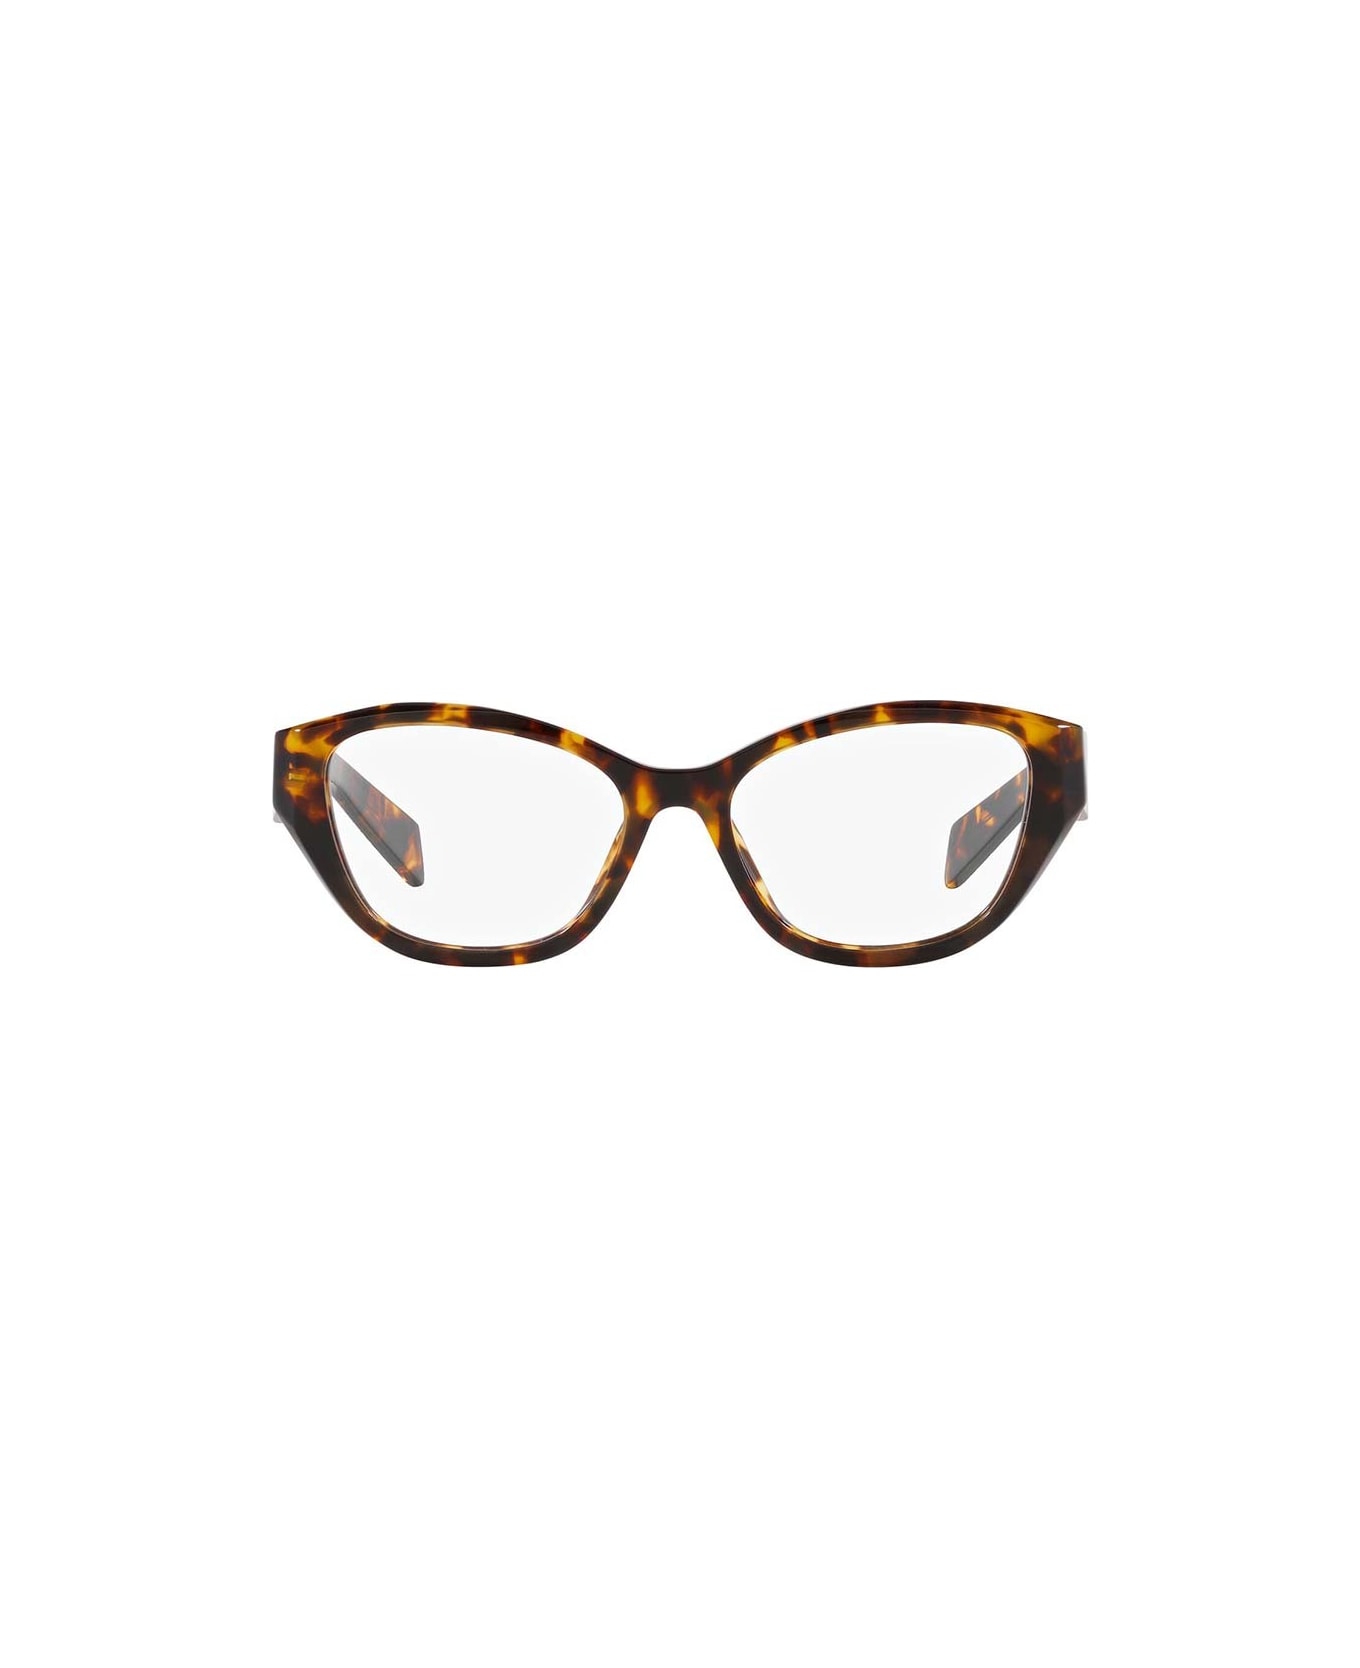 Prada Eyewear Glasses - 14L1O1 アイウェア